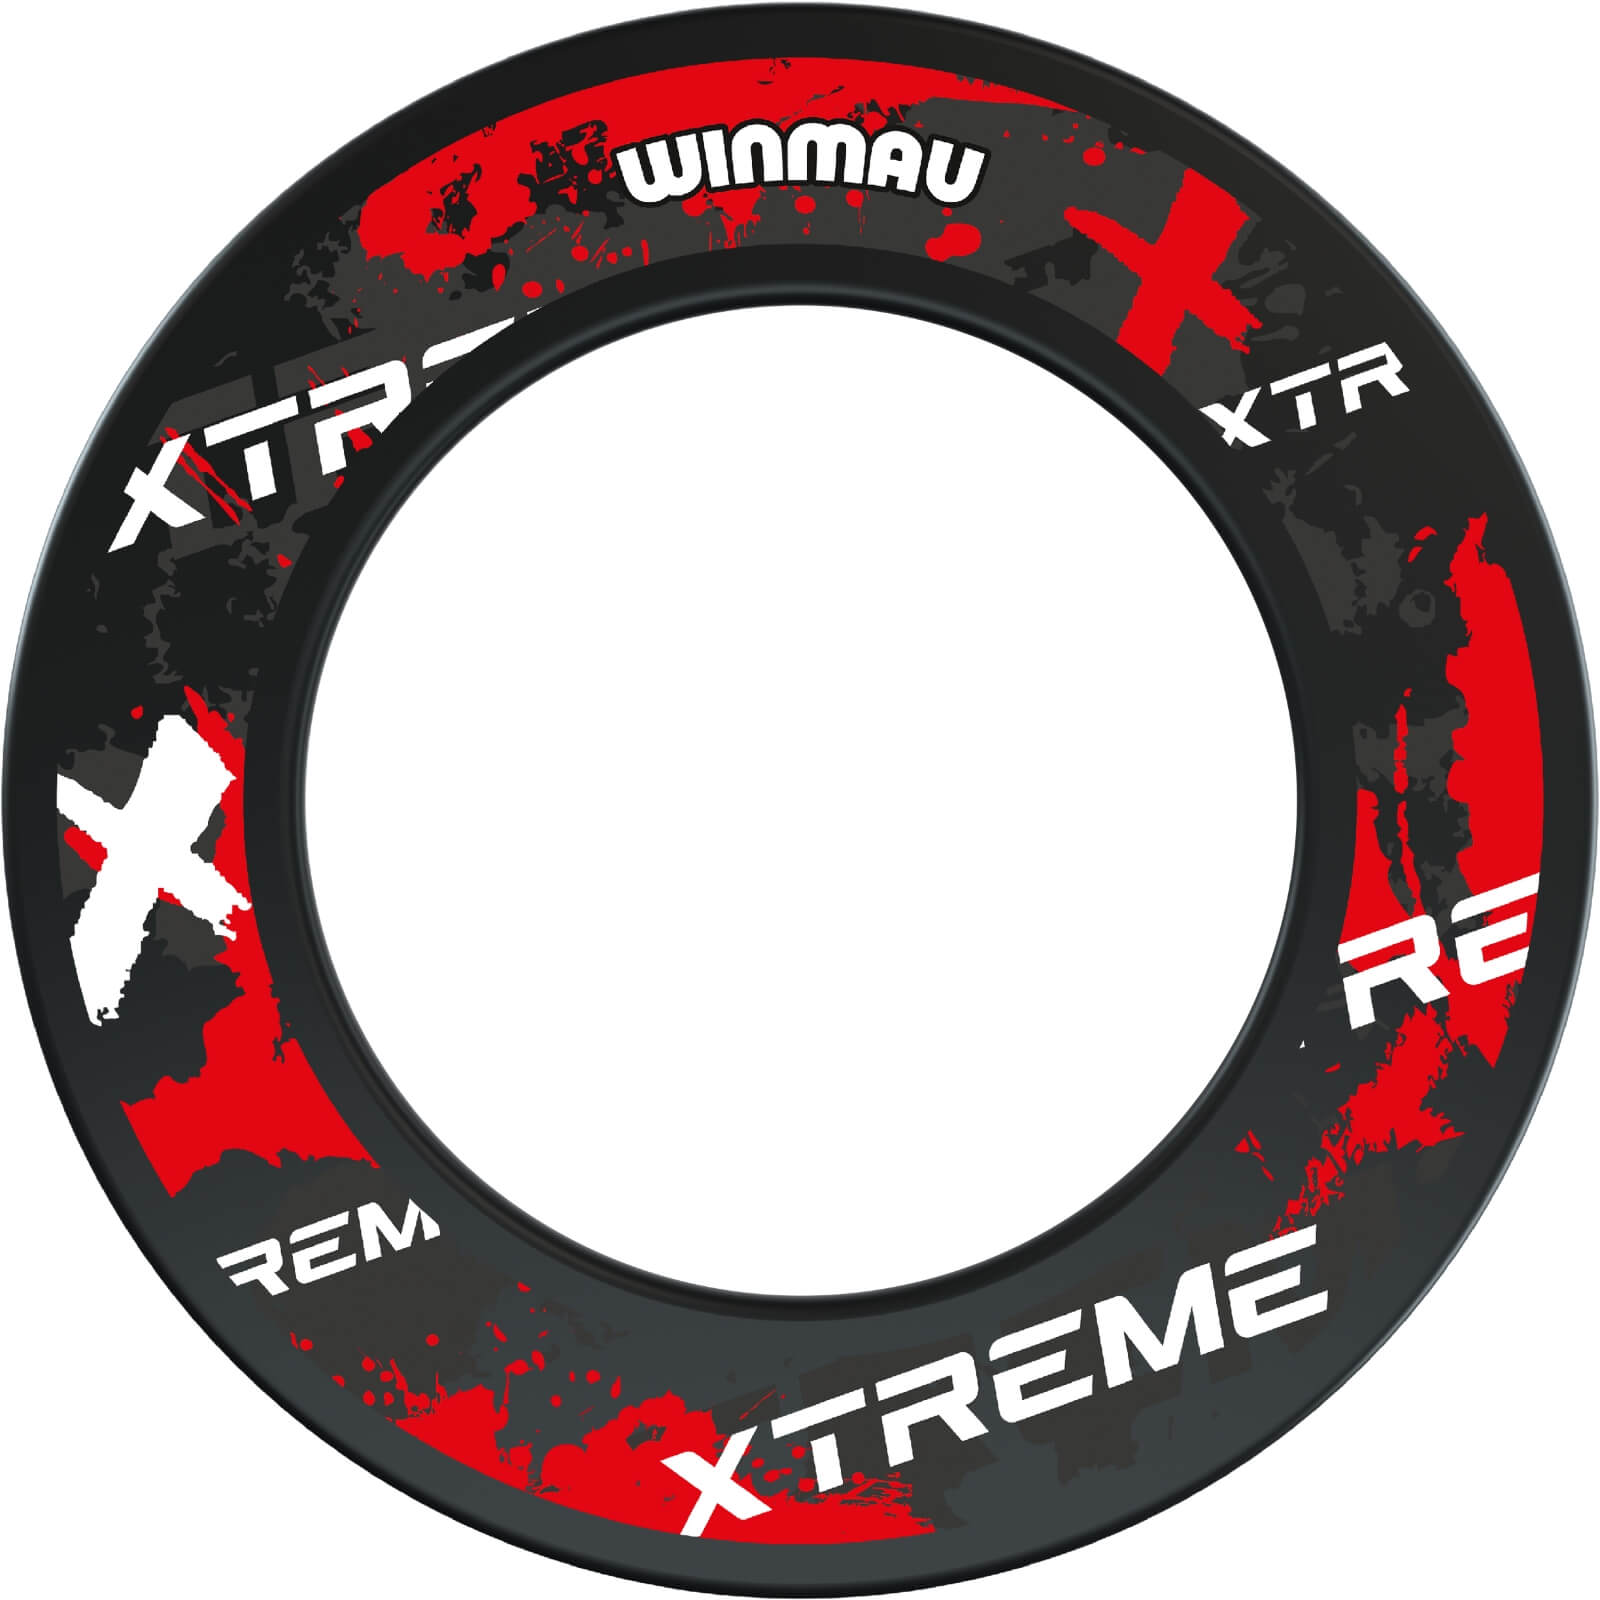 Dartboard Accessories - Winmau - Xtreme Red Dartboard Surround 